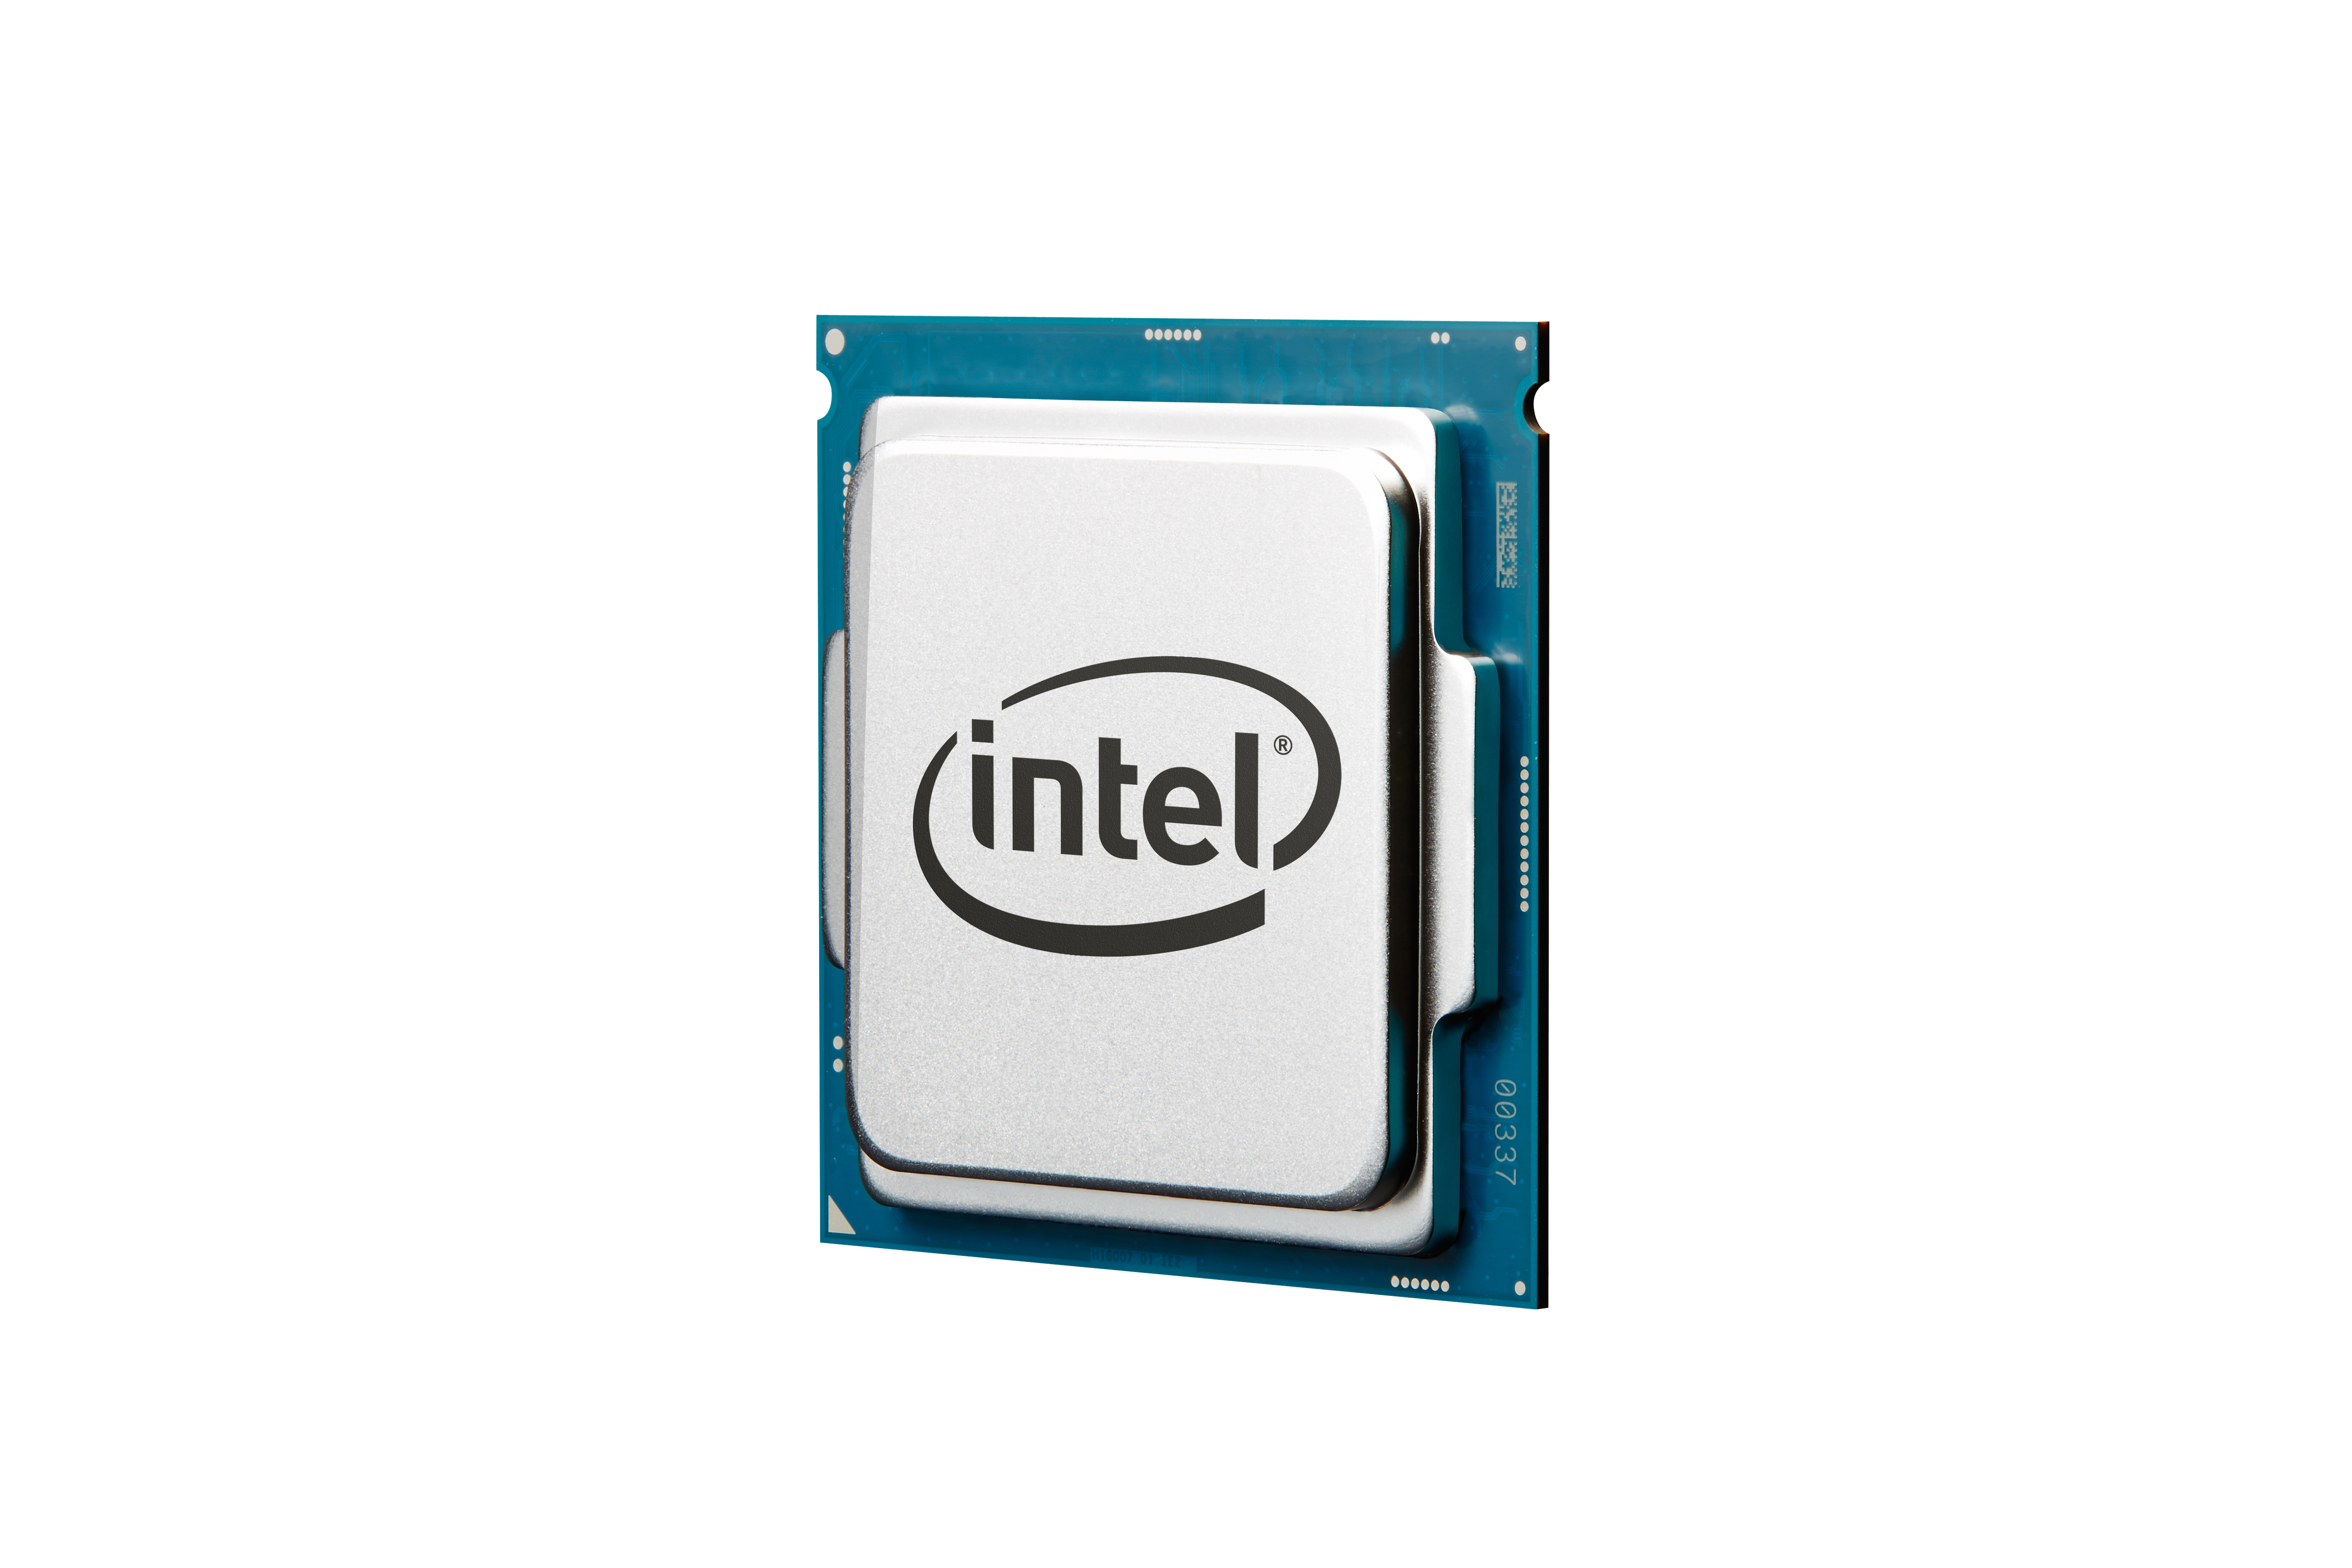 Intel 6th Generation Core i5 Processor